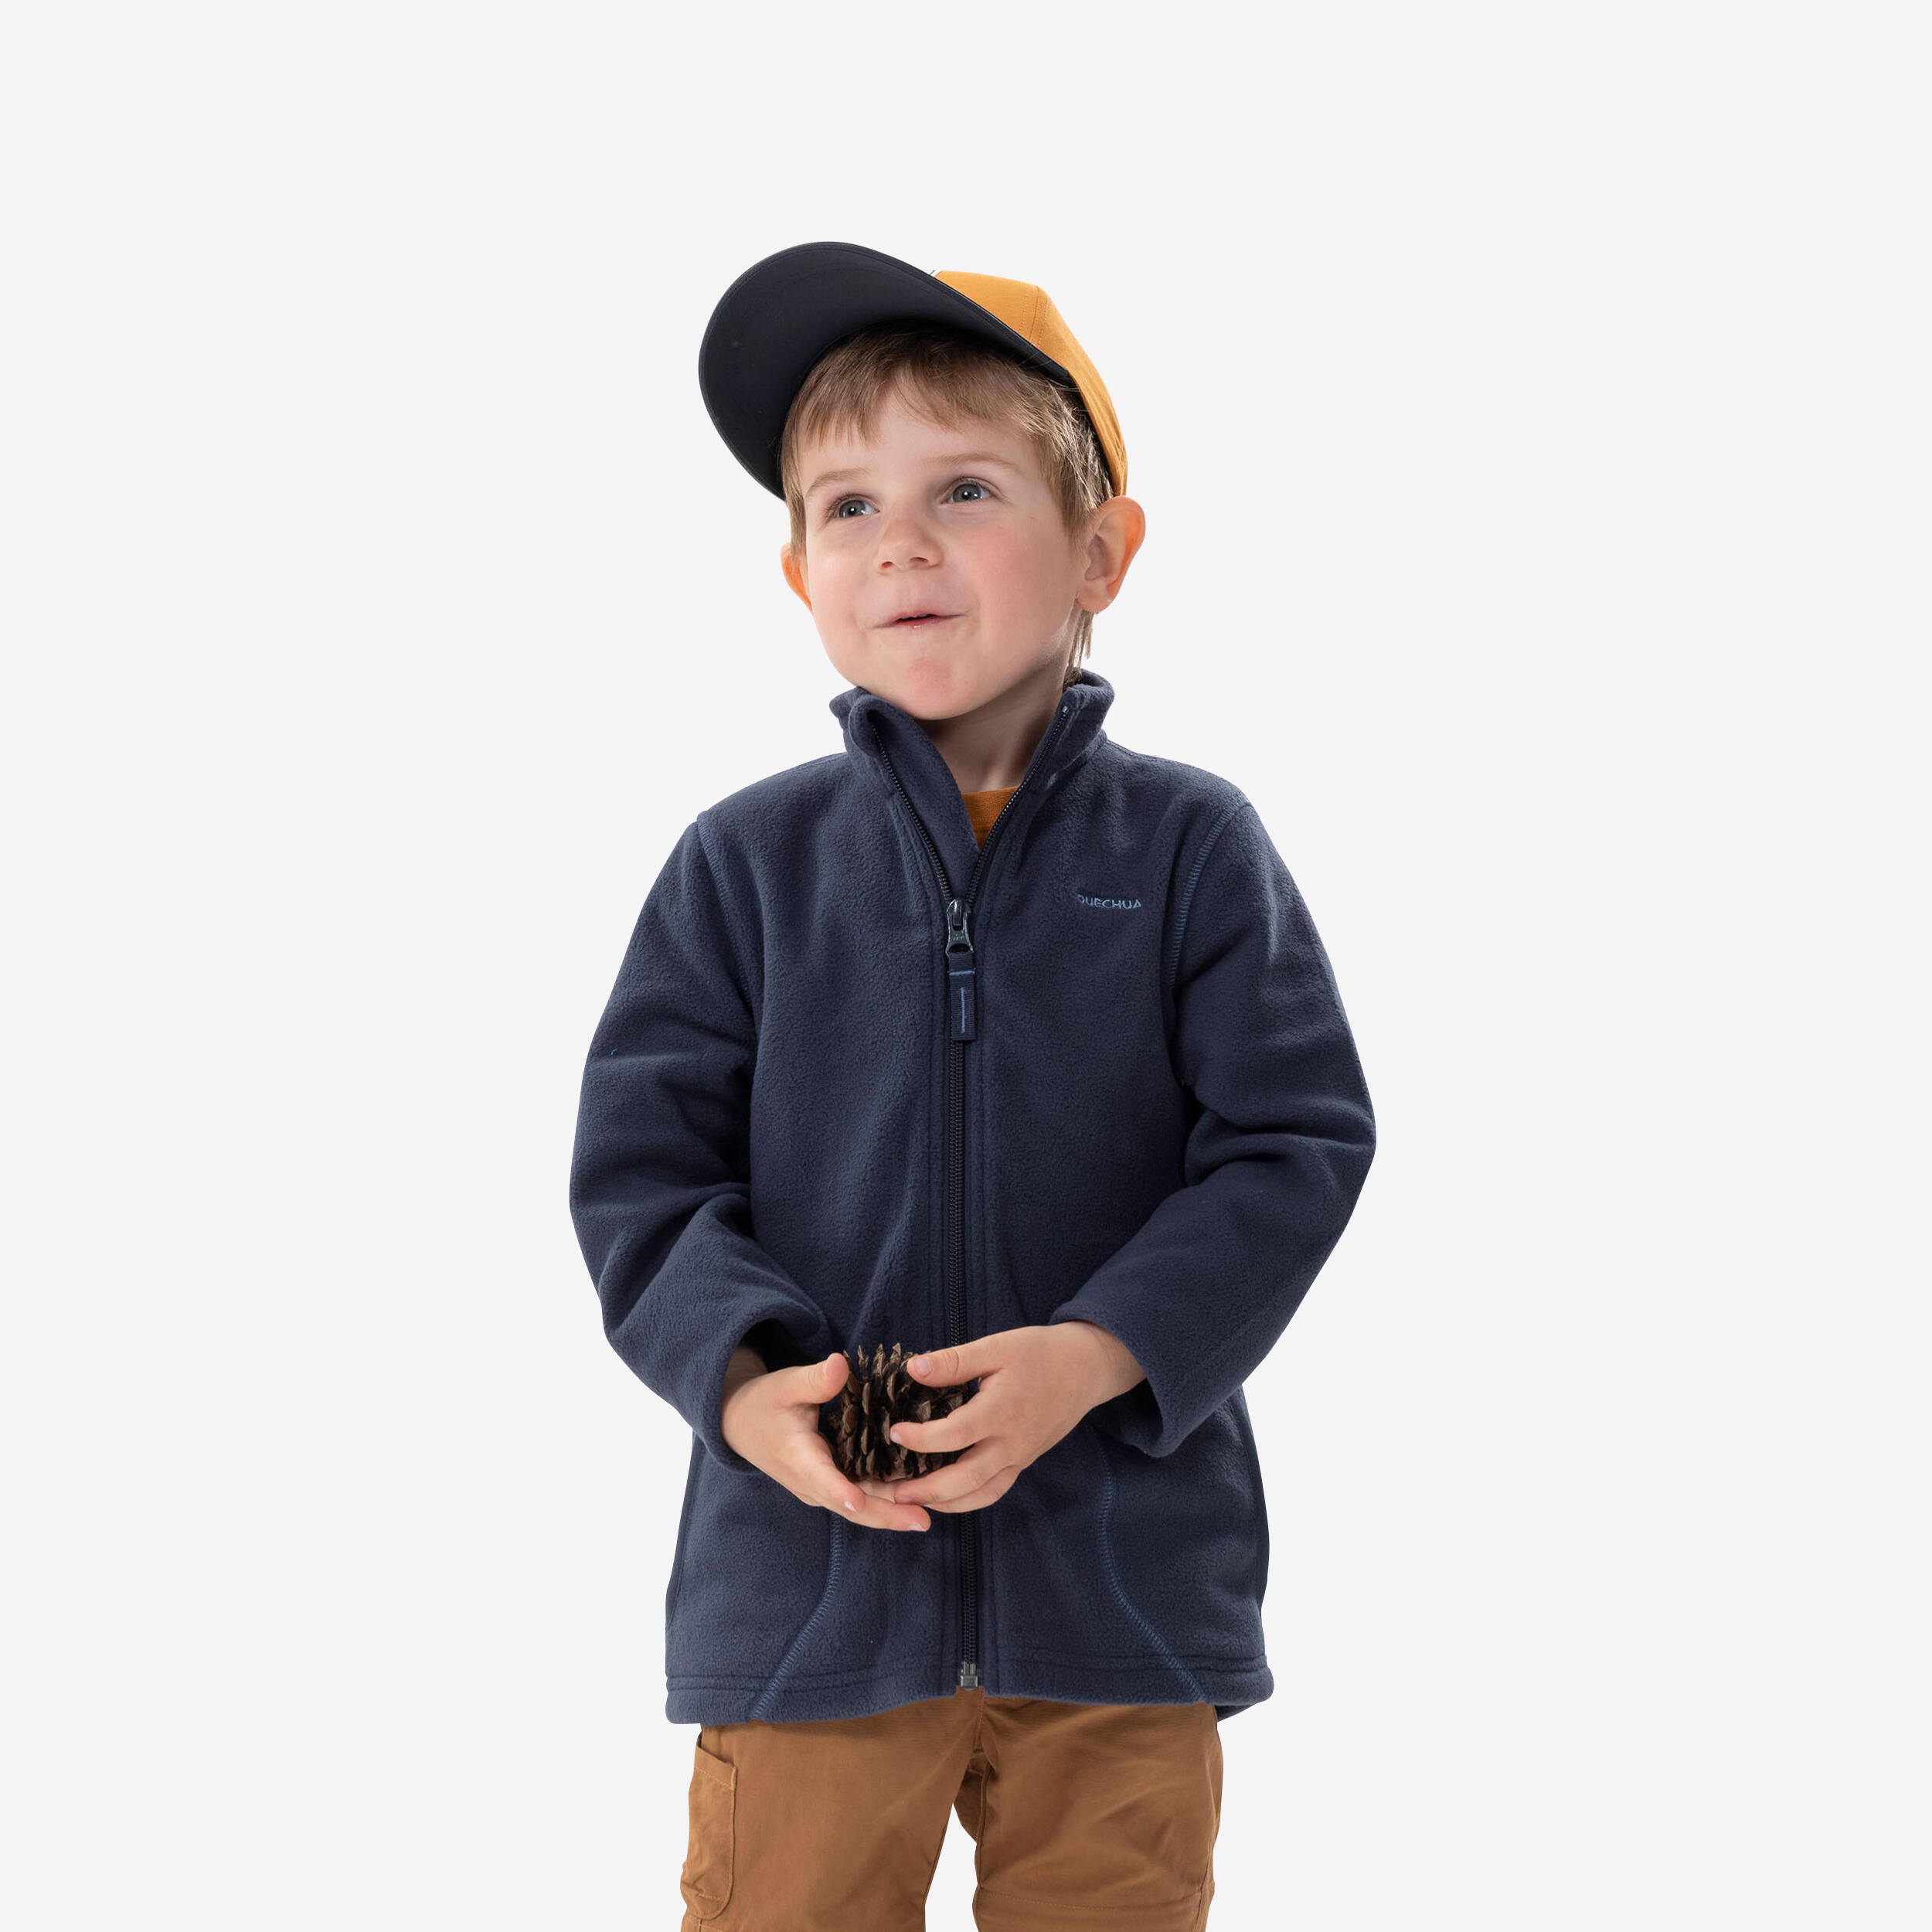 Kids’ Fleece Hiking Jacket - MH150 Aged 2-6 - Blue 1/6